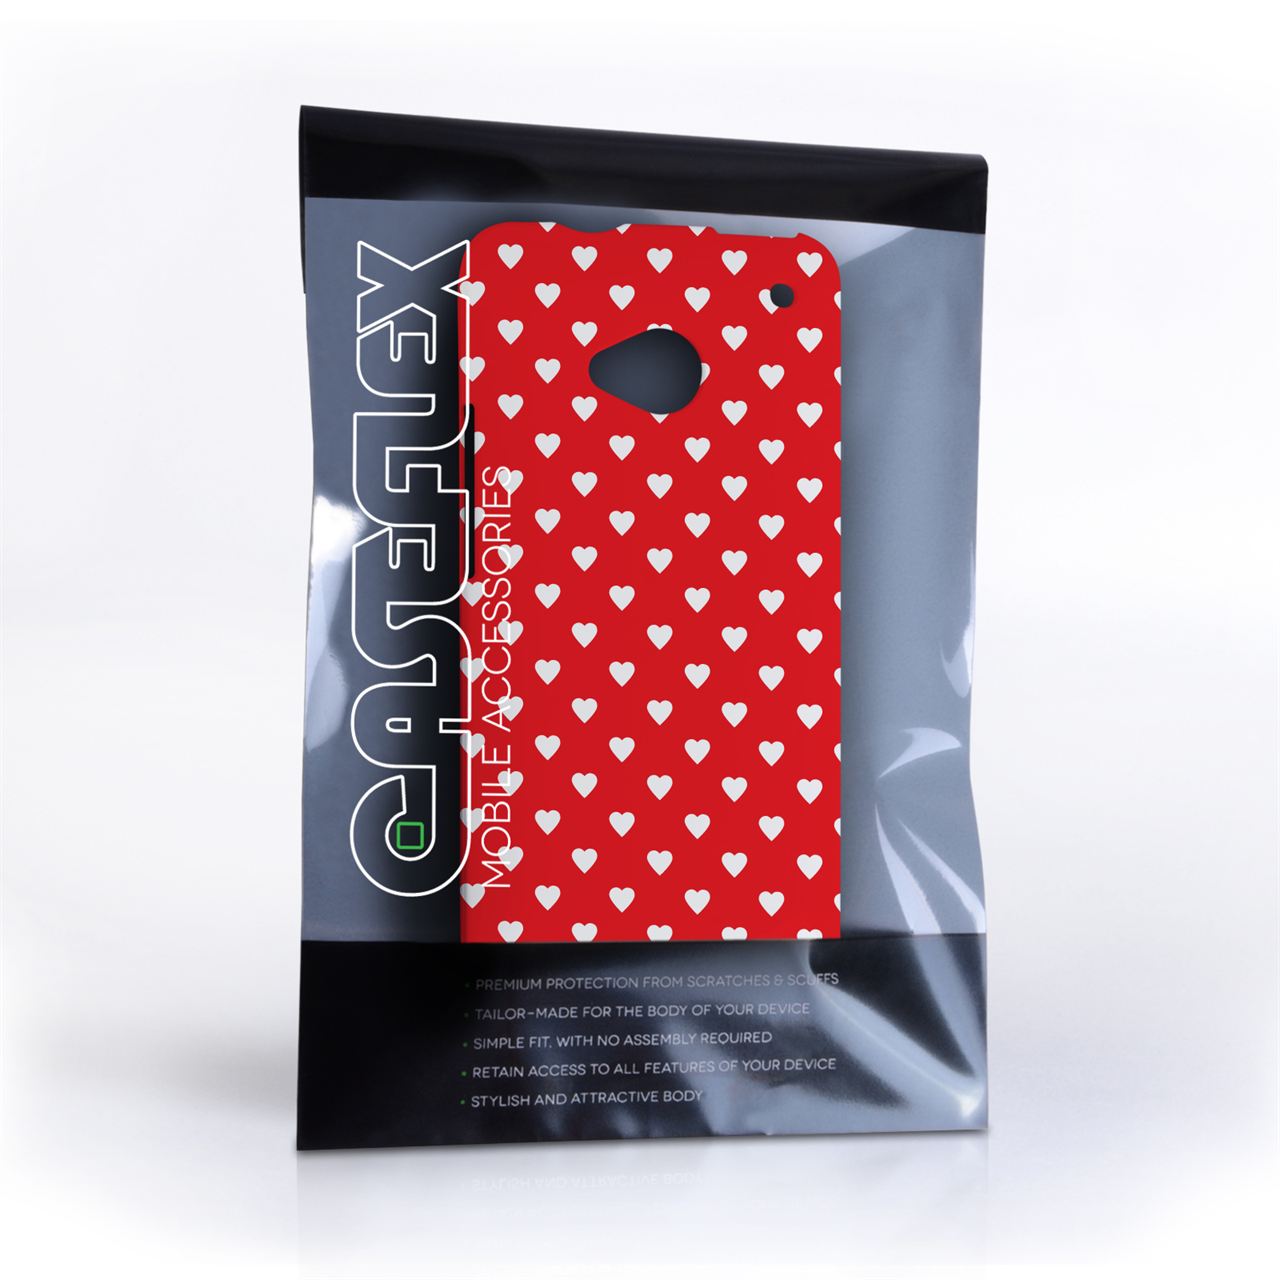 Caseflex HTC One Cute Hearts Red and White Case